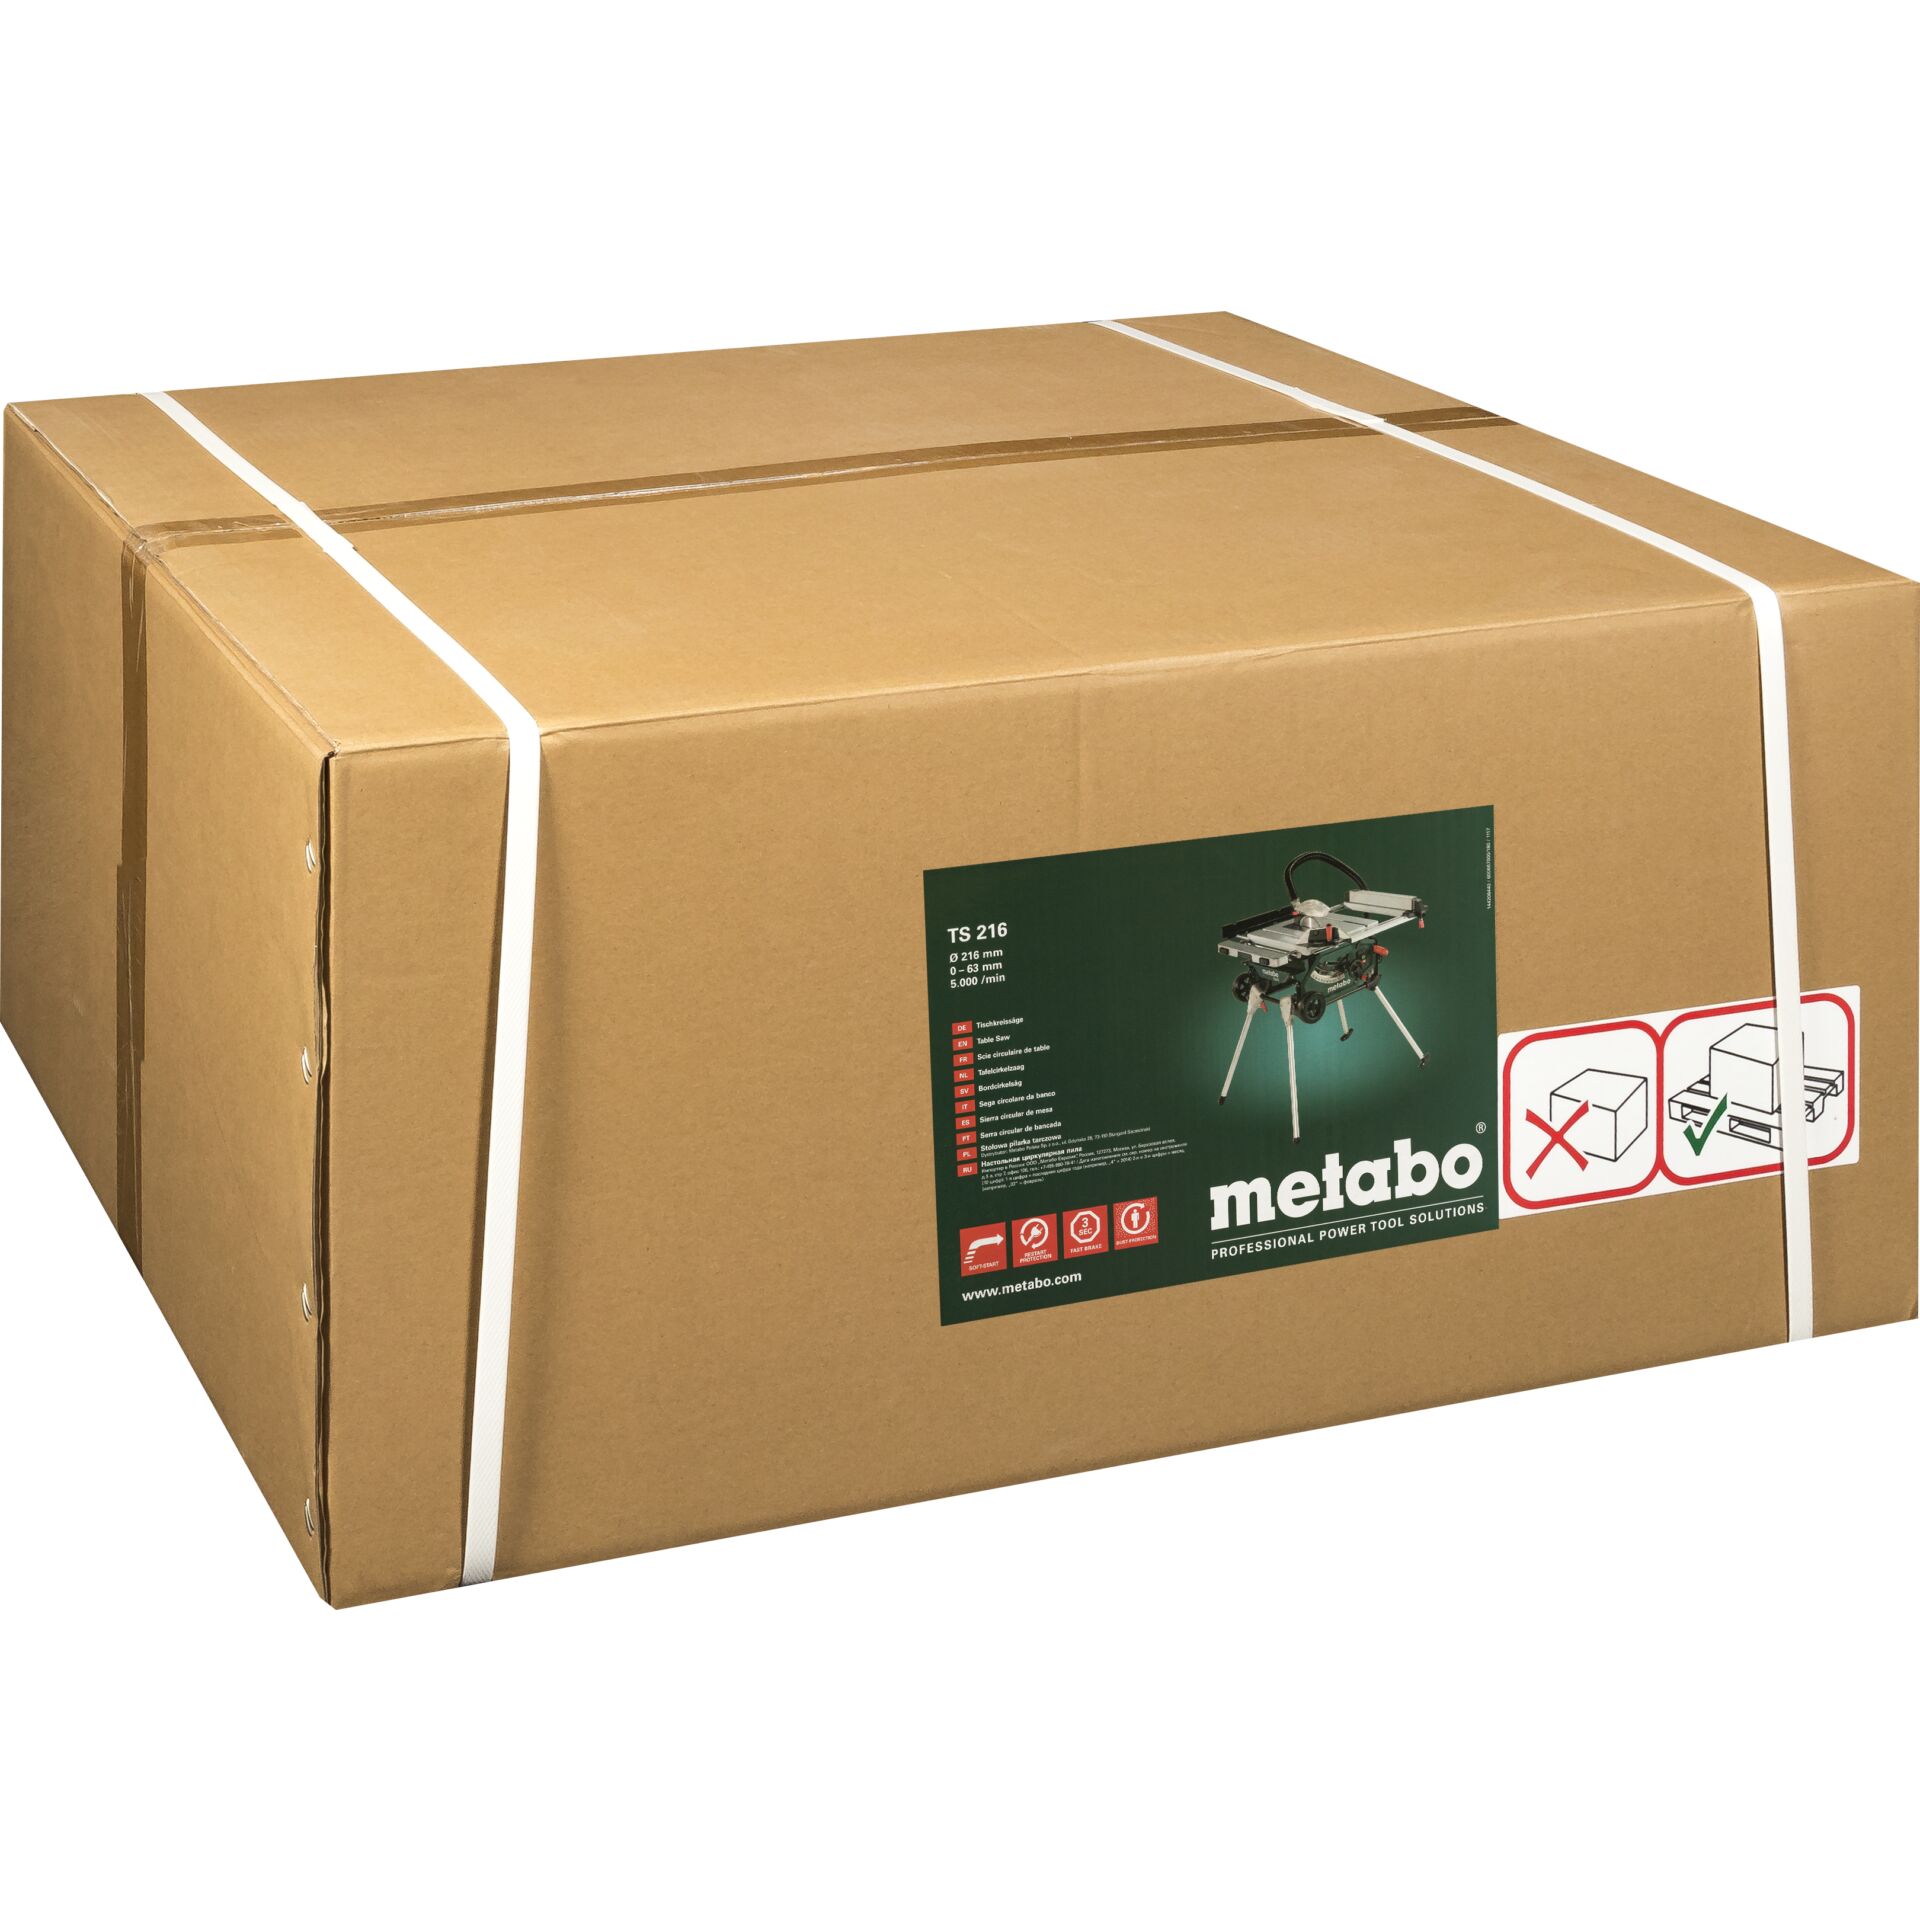 Metabo TS 216 5000 RPM